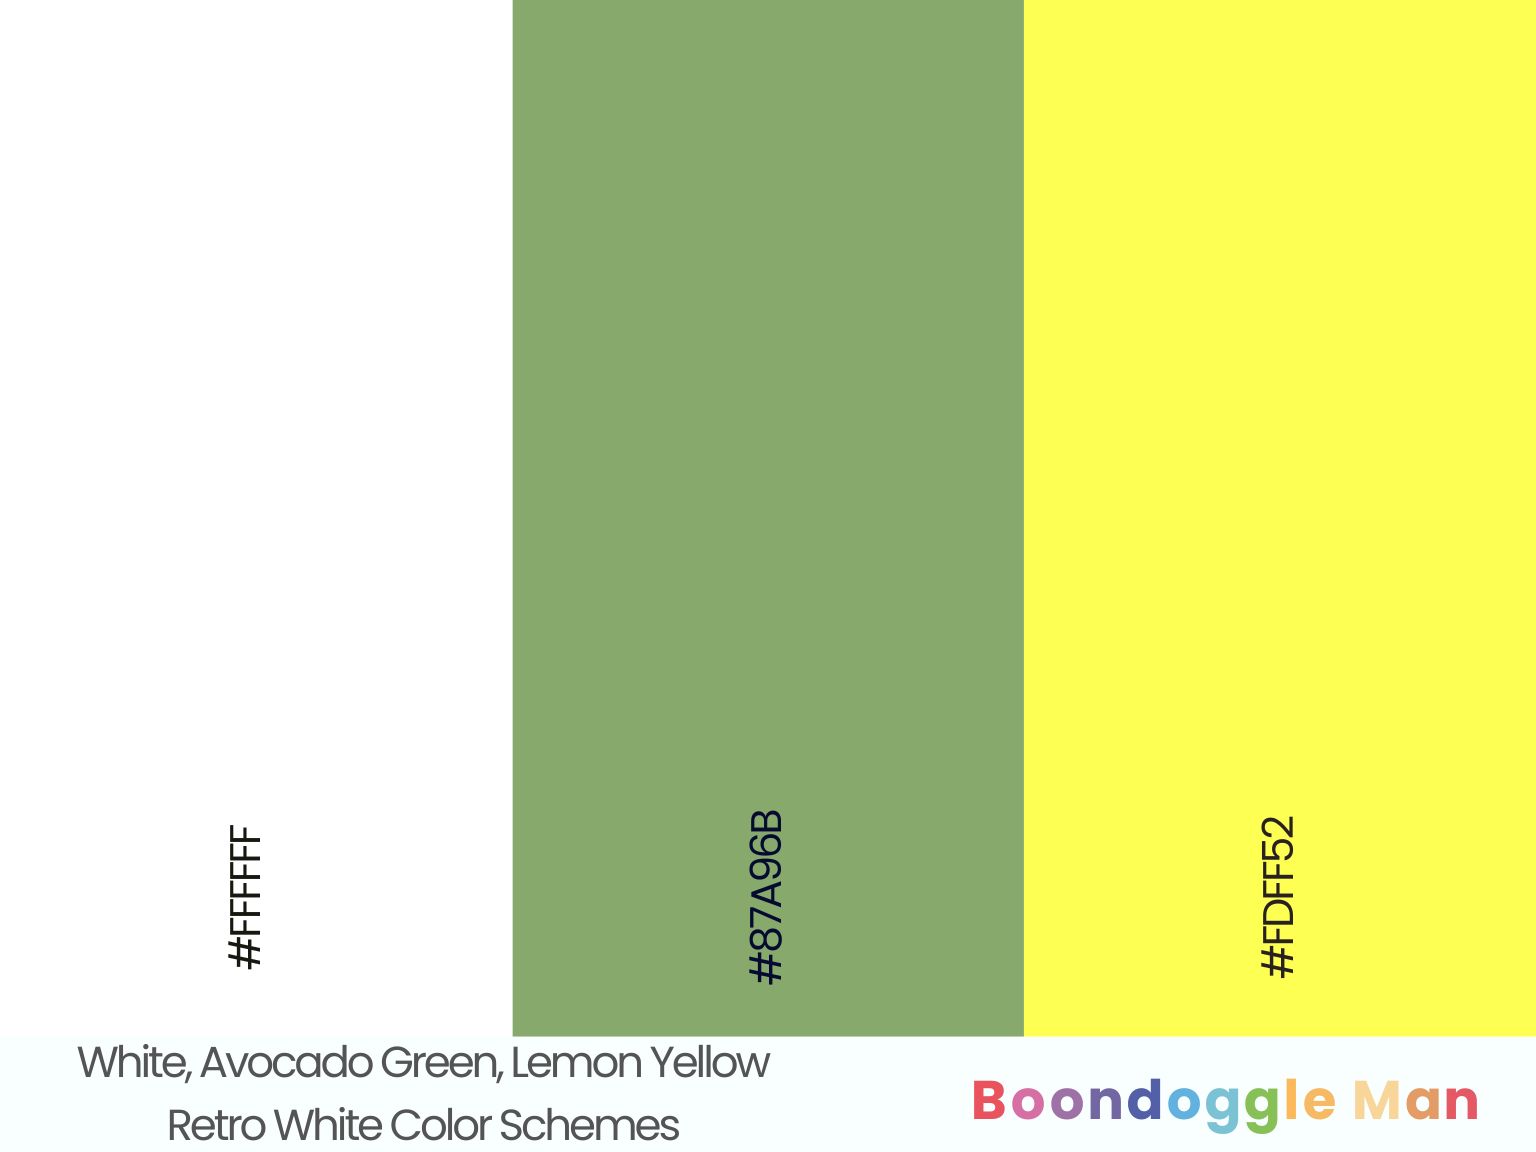 White, Avocado Green, Lemon Yellow